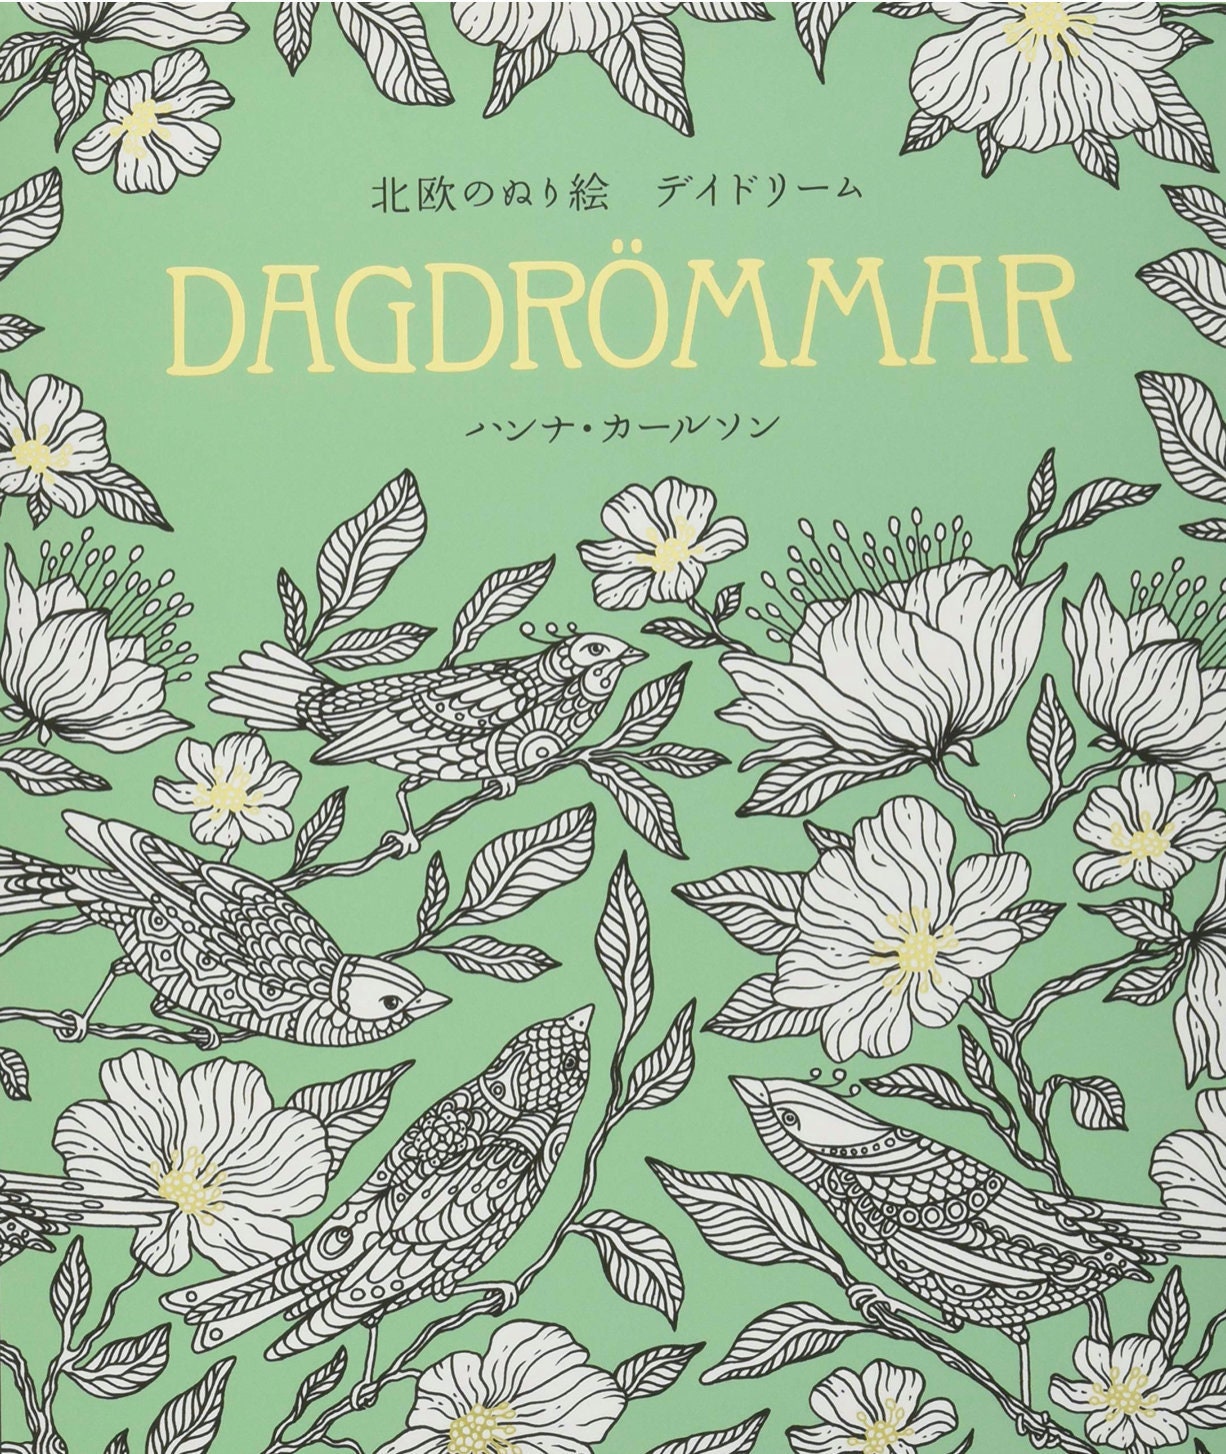 Dagdrömmar - Daydreams, Hanna Karlzon Coloured by Wendy